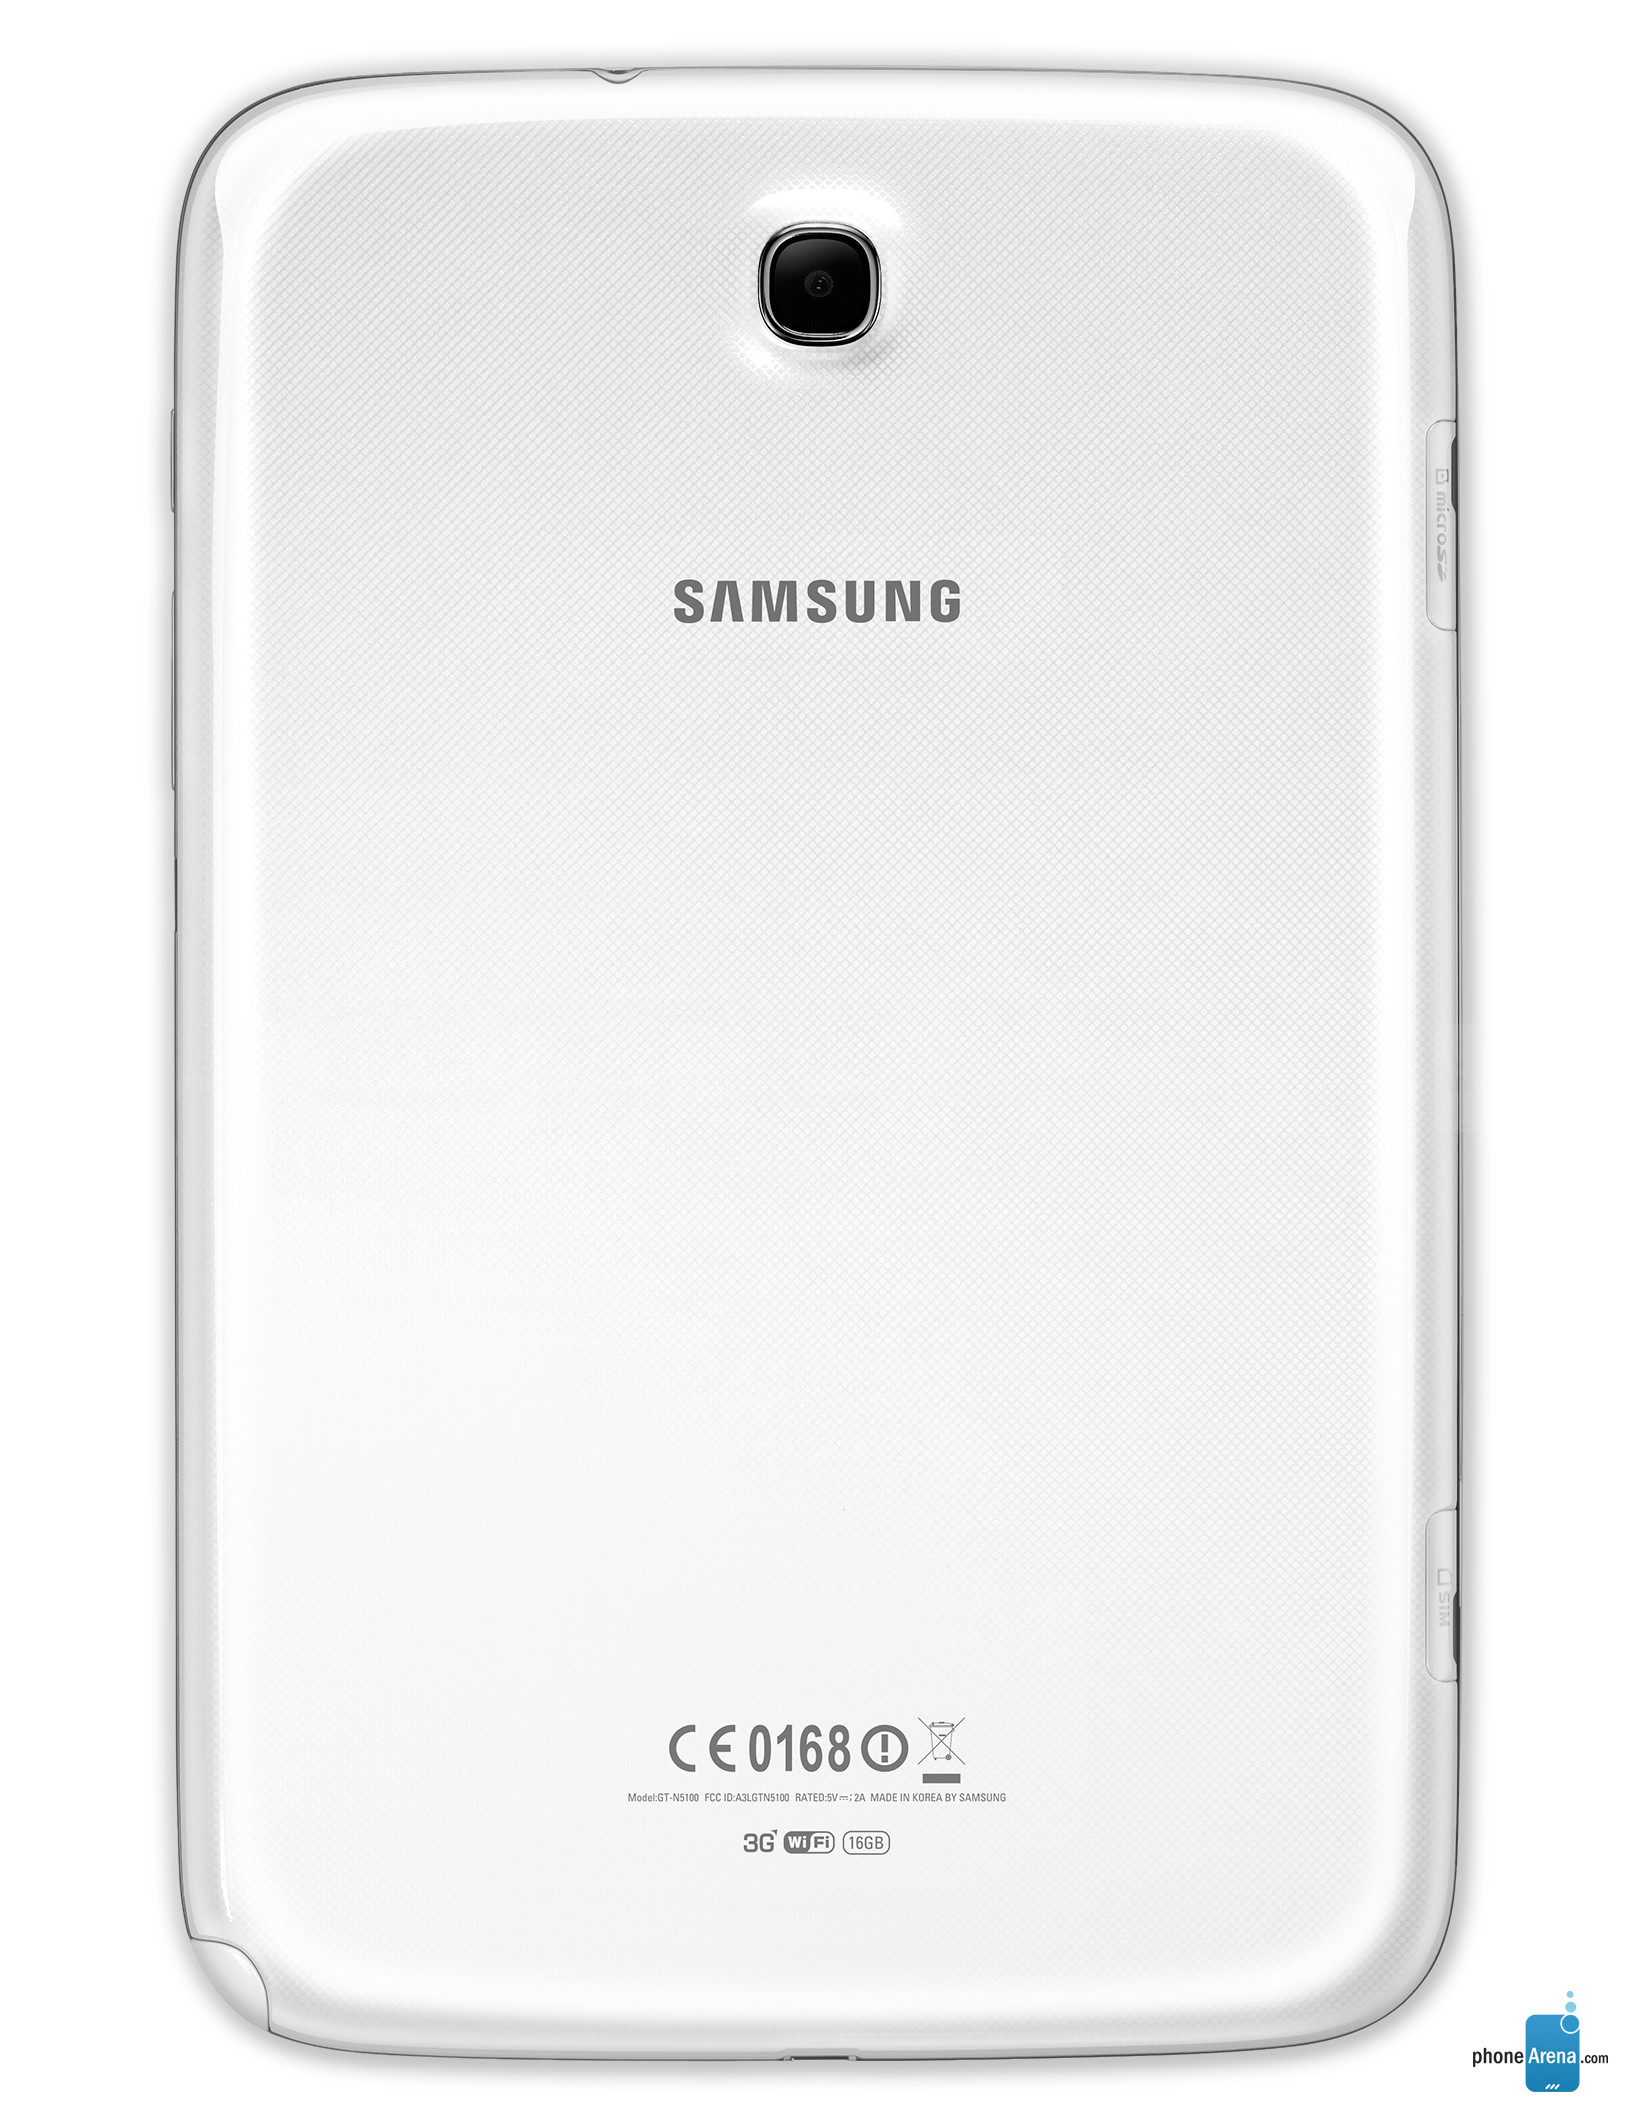 Samsung Galaxy Note 8.0 Tablet User Manual